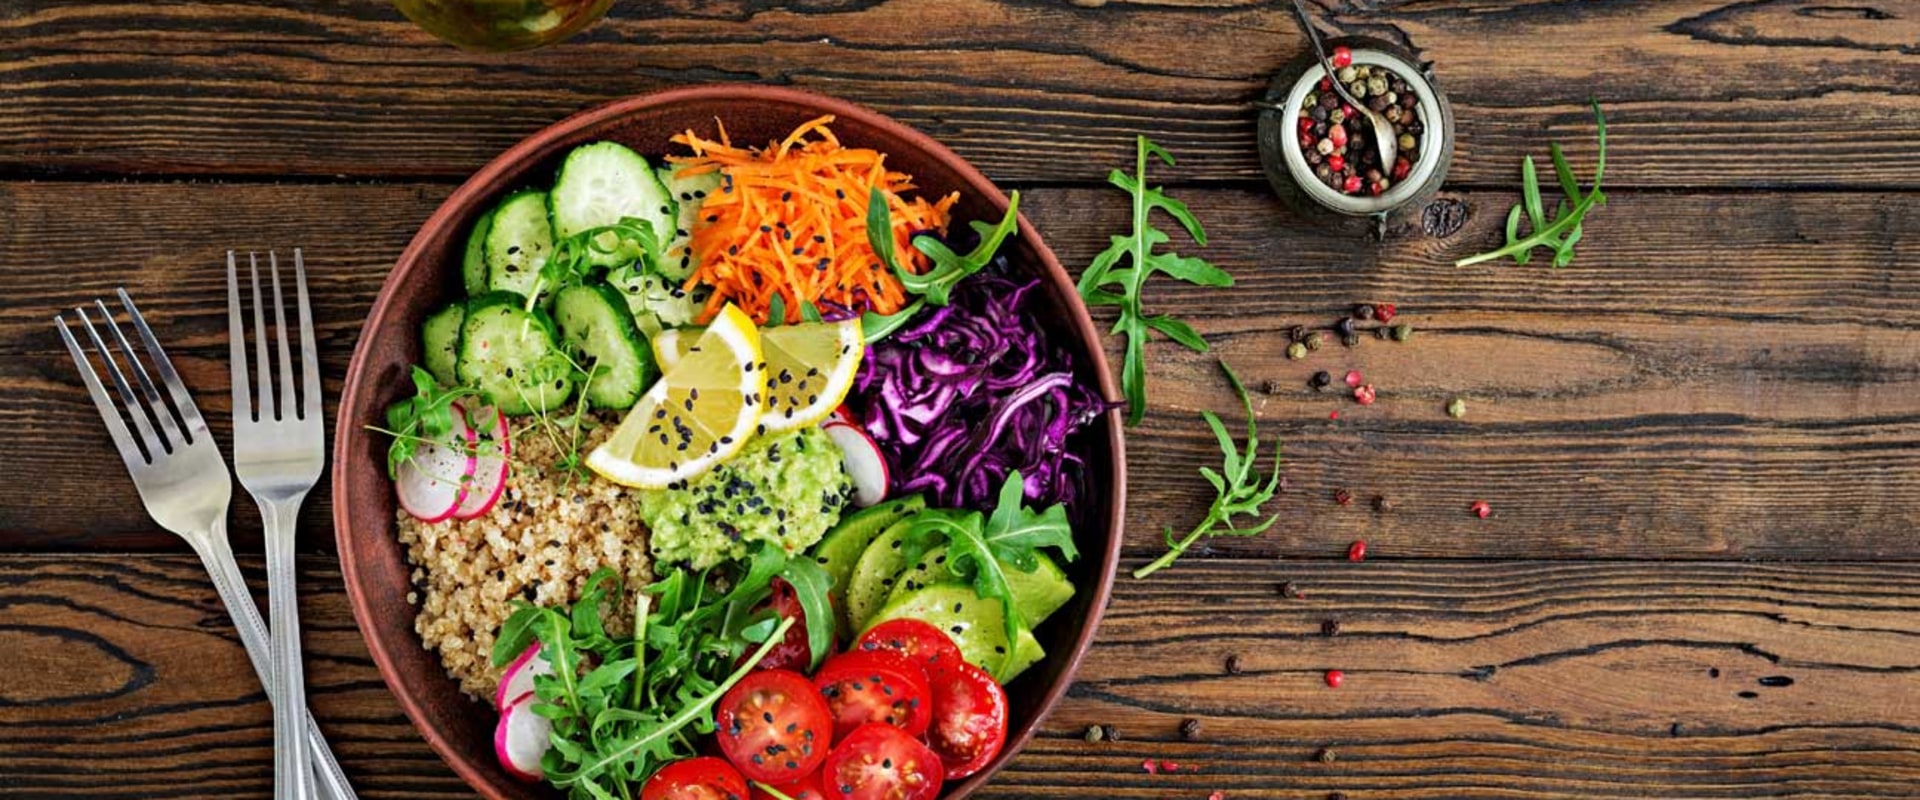 Vegetarian Diet Plan: A Healthy, Balanced Diet